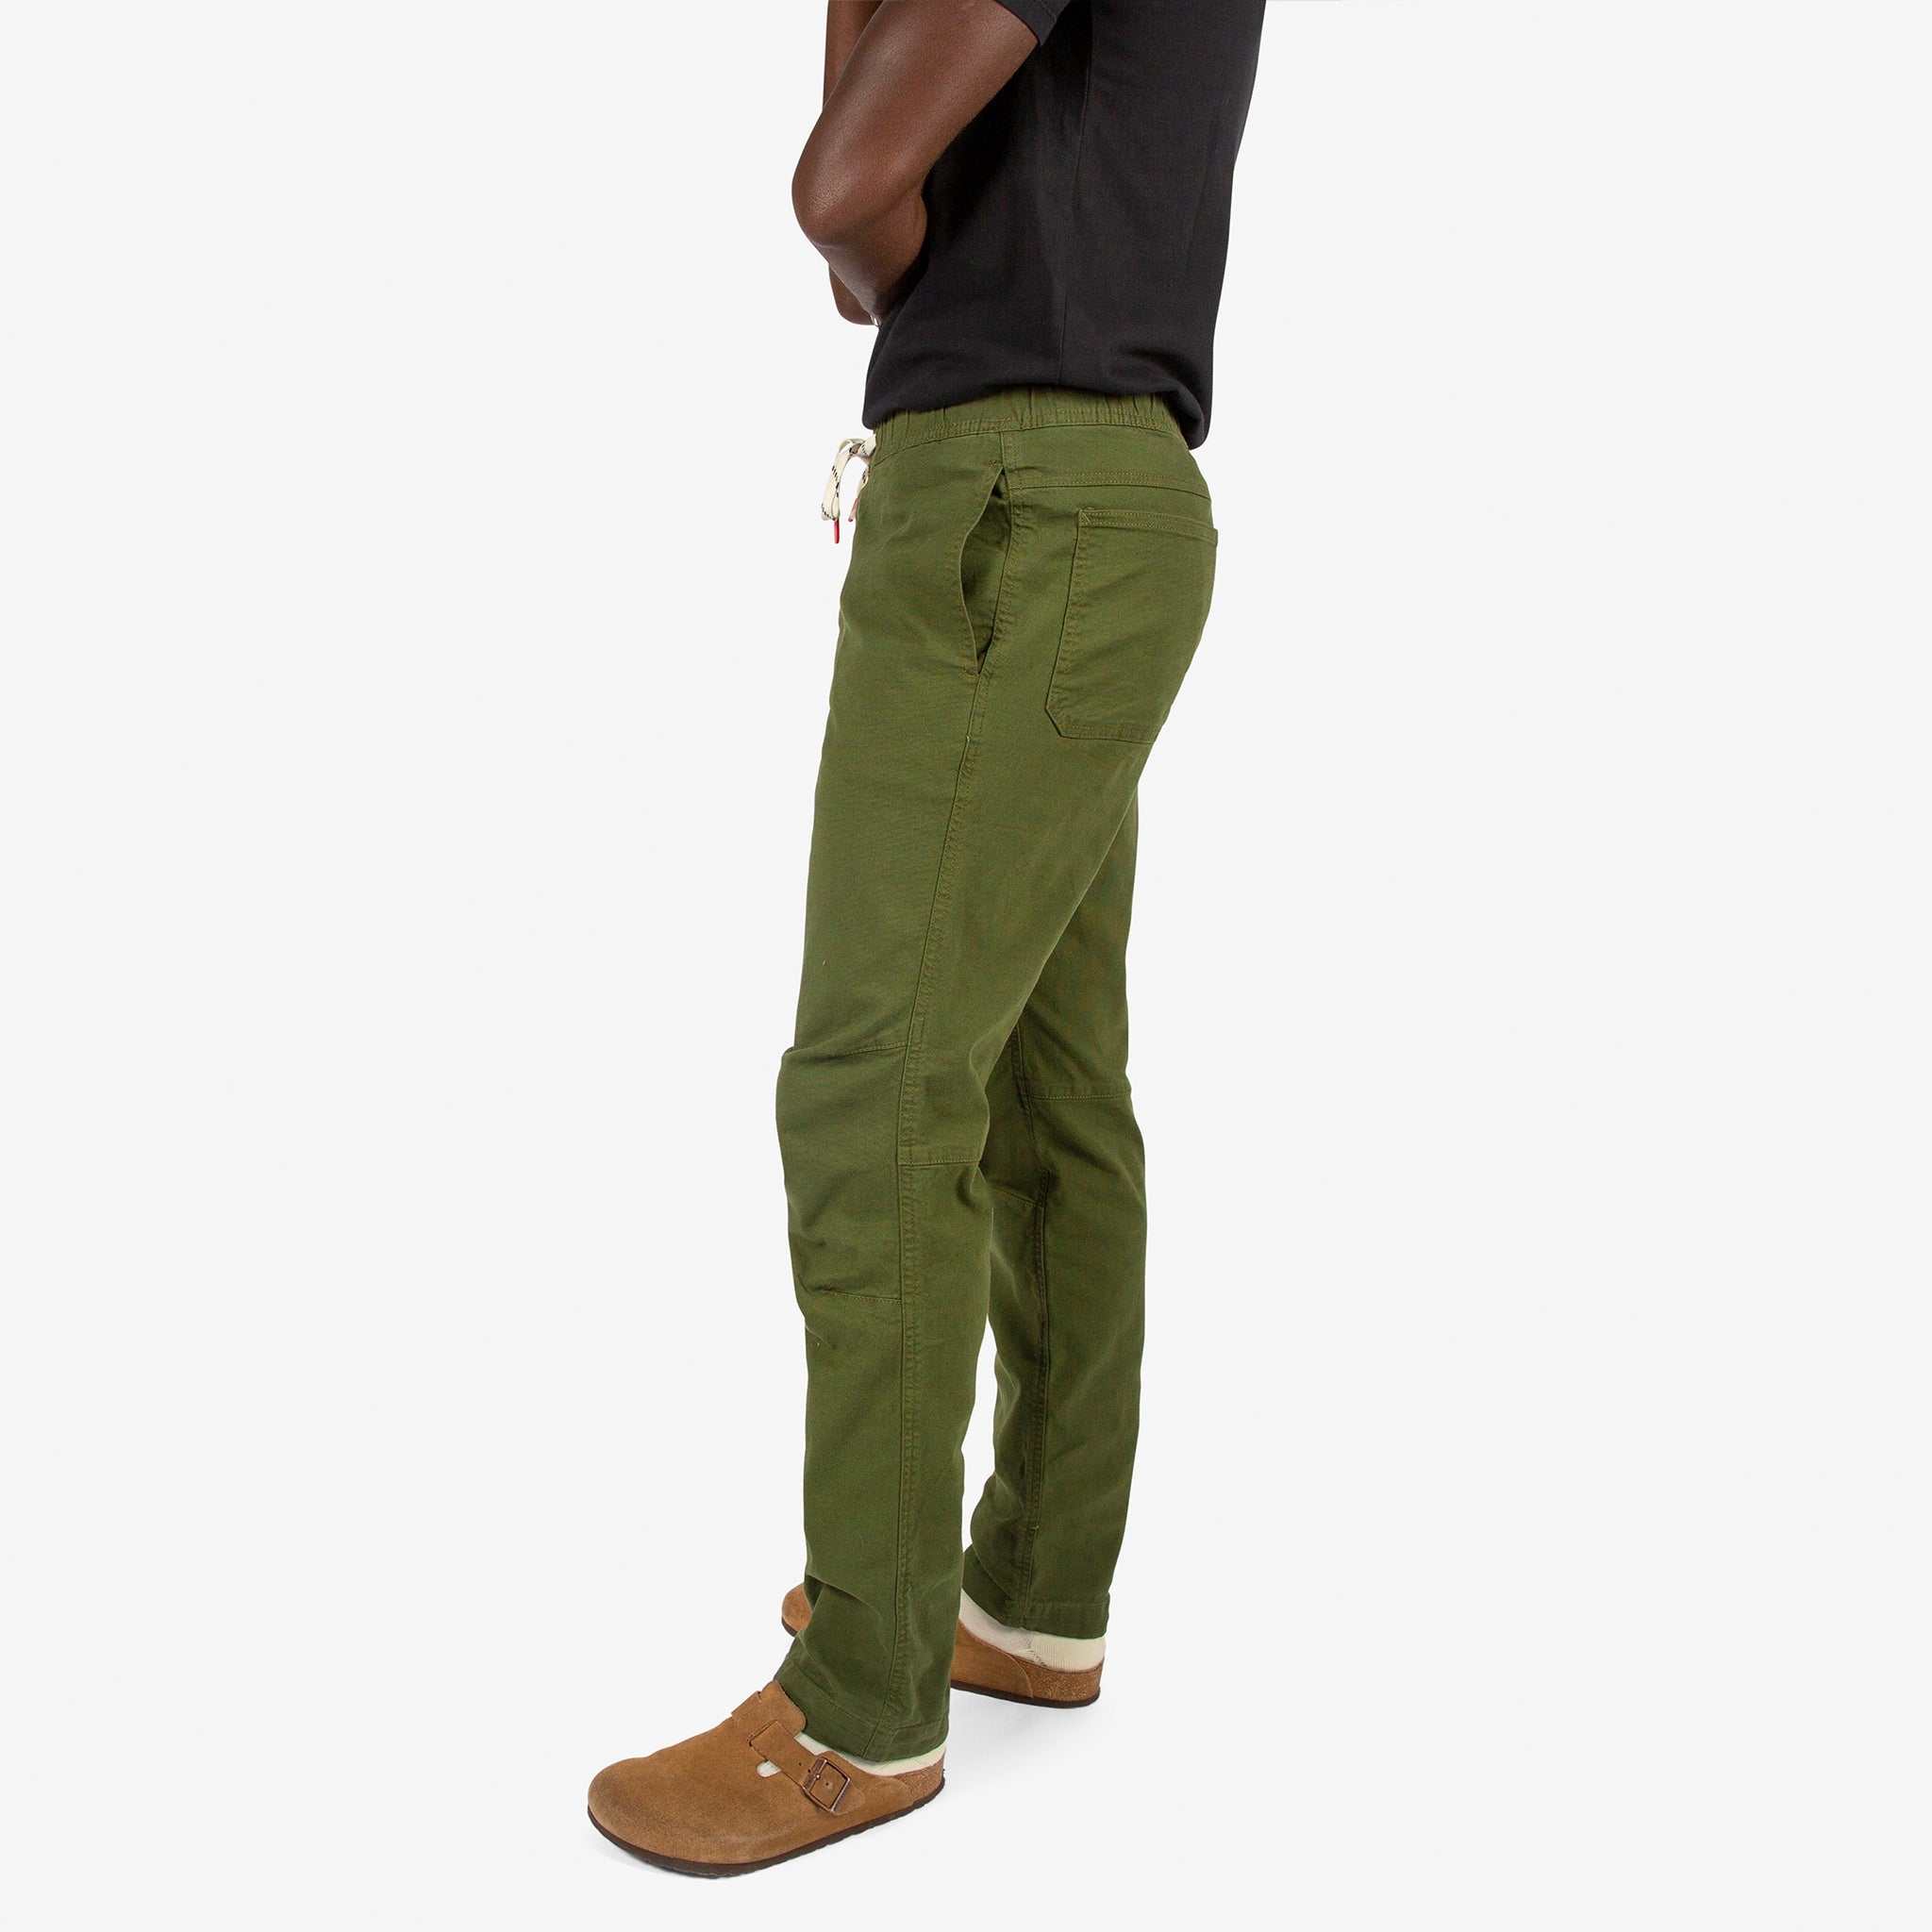 Close-up side model shot of Topo Designs Men's Dirt Shirt & Pants in "Olive" green.